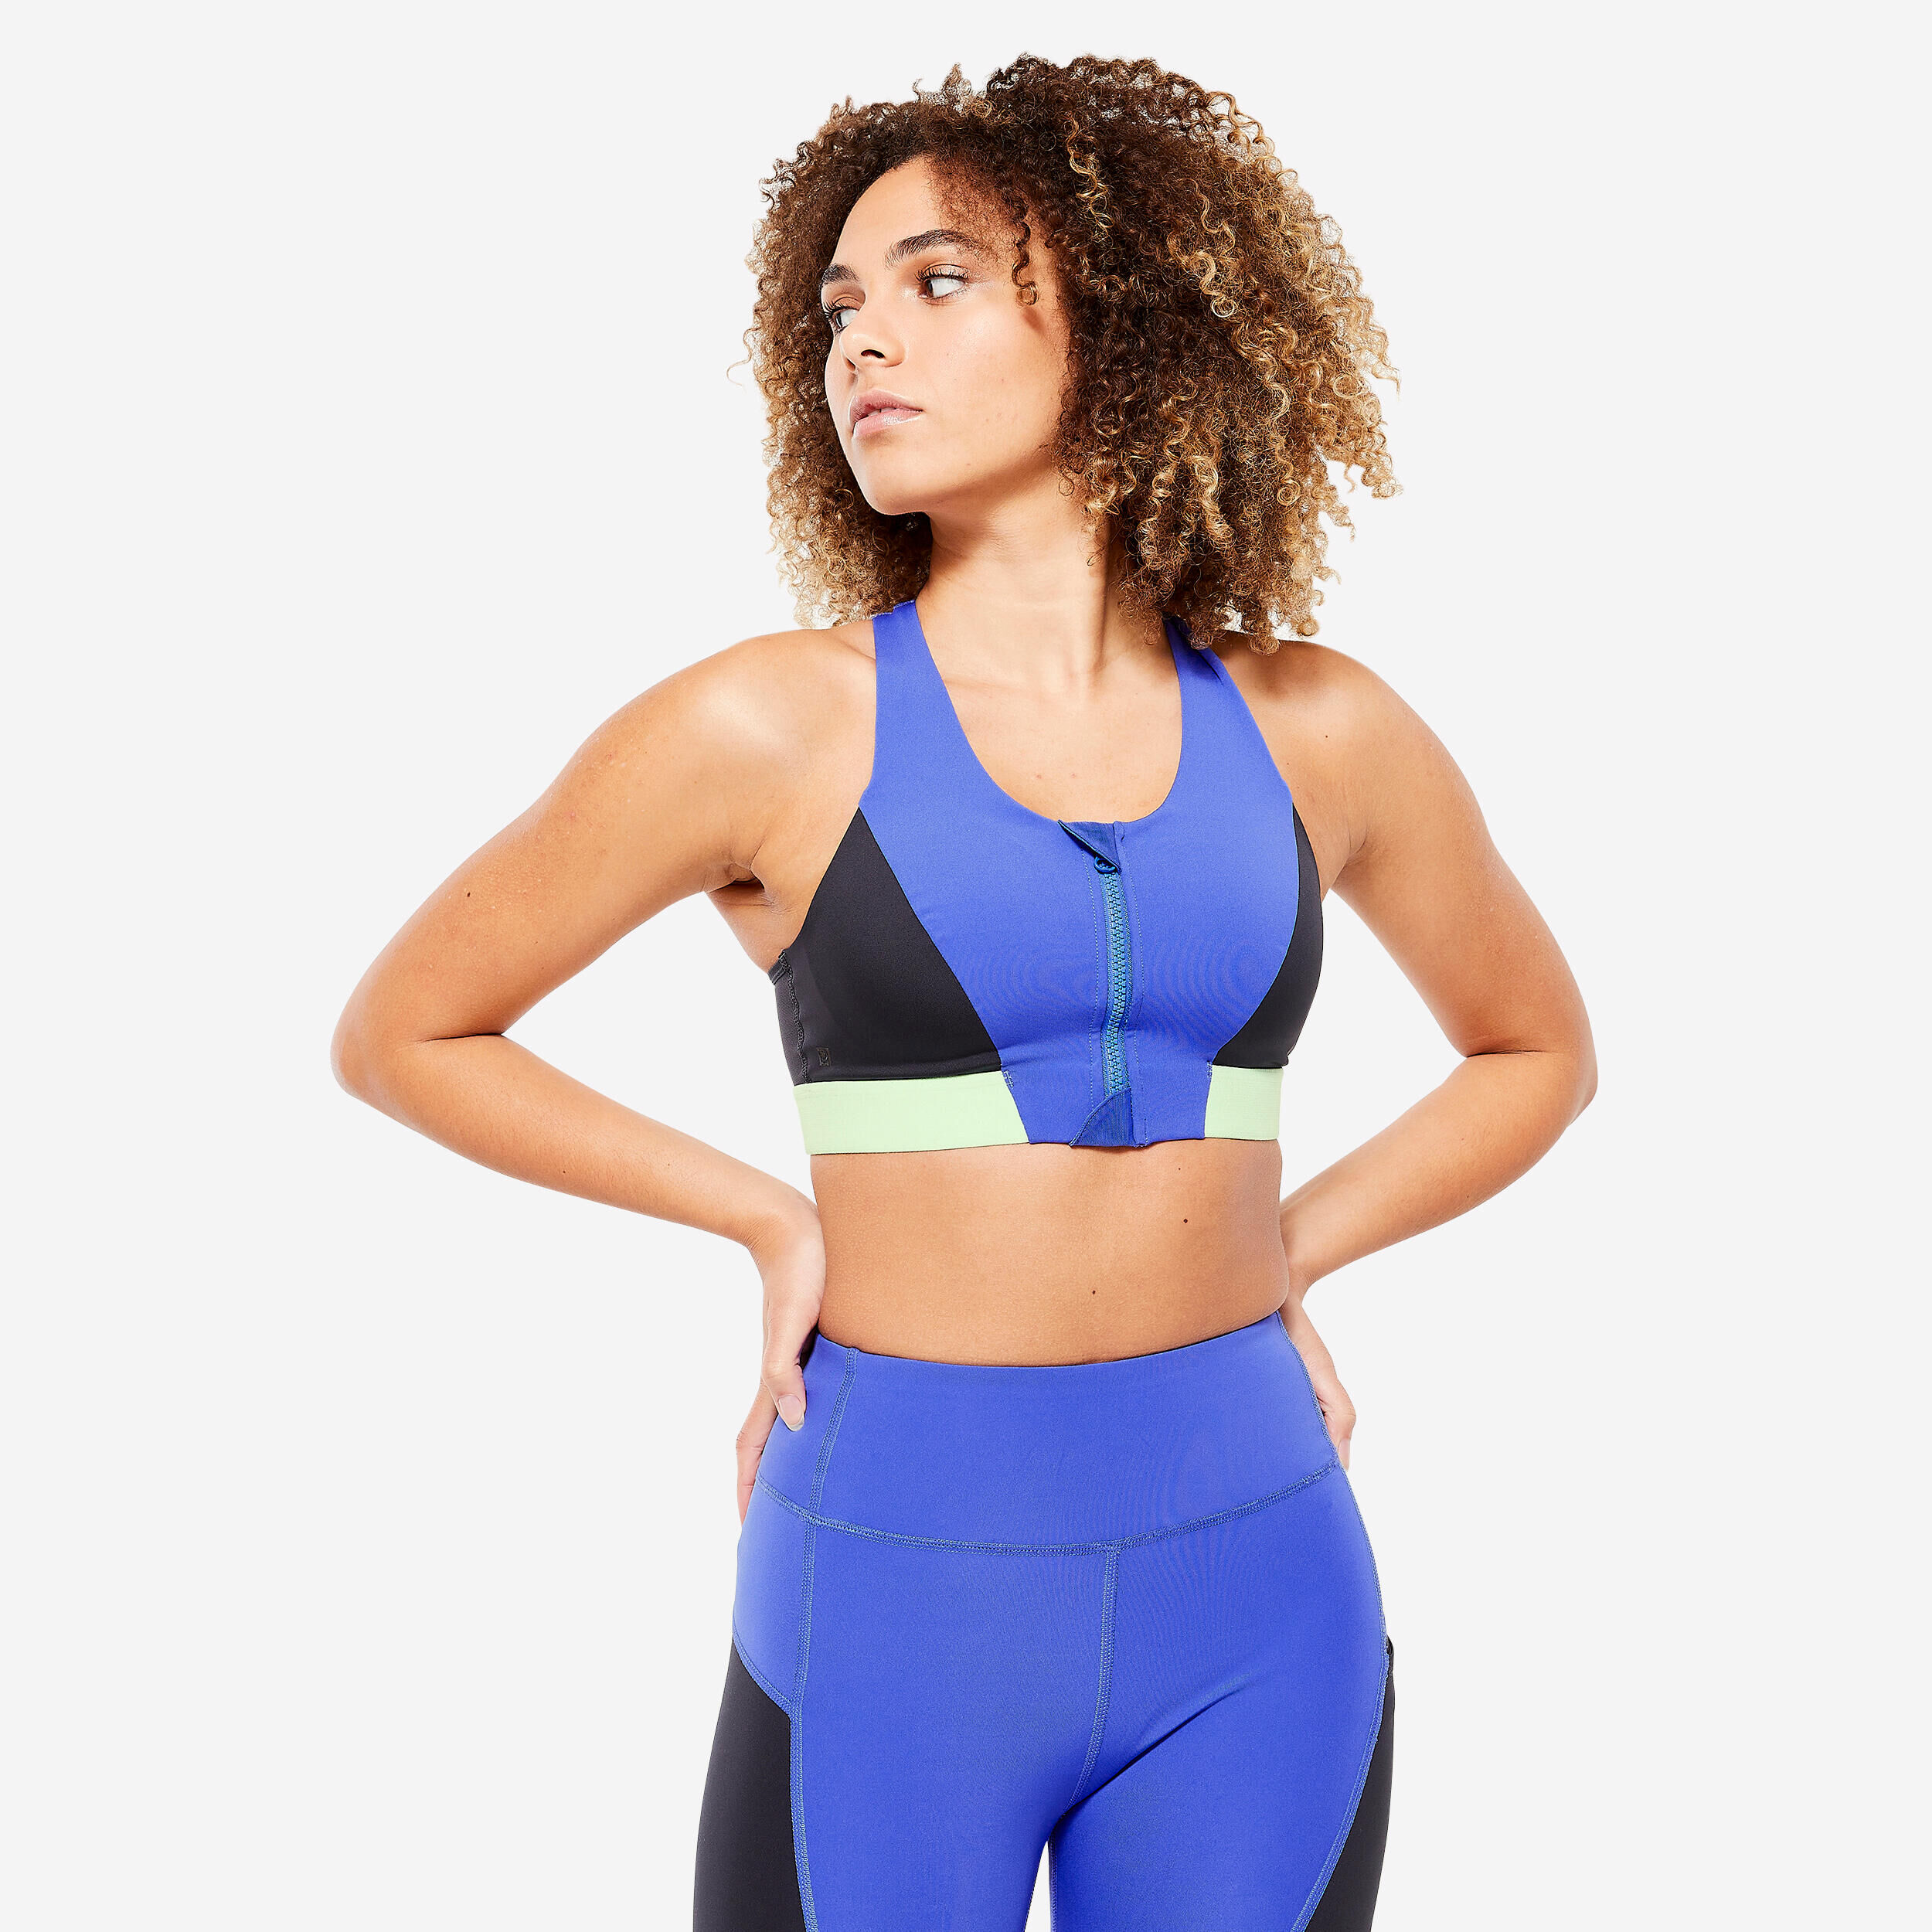 DOMYOS Women's Medium-Support Zipped Sports Bra - Indigo Blue/Grey/Sorbet Green